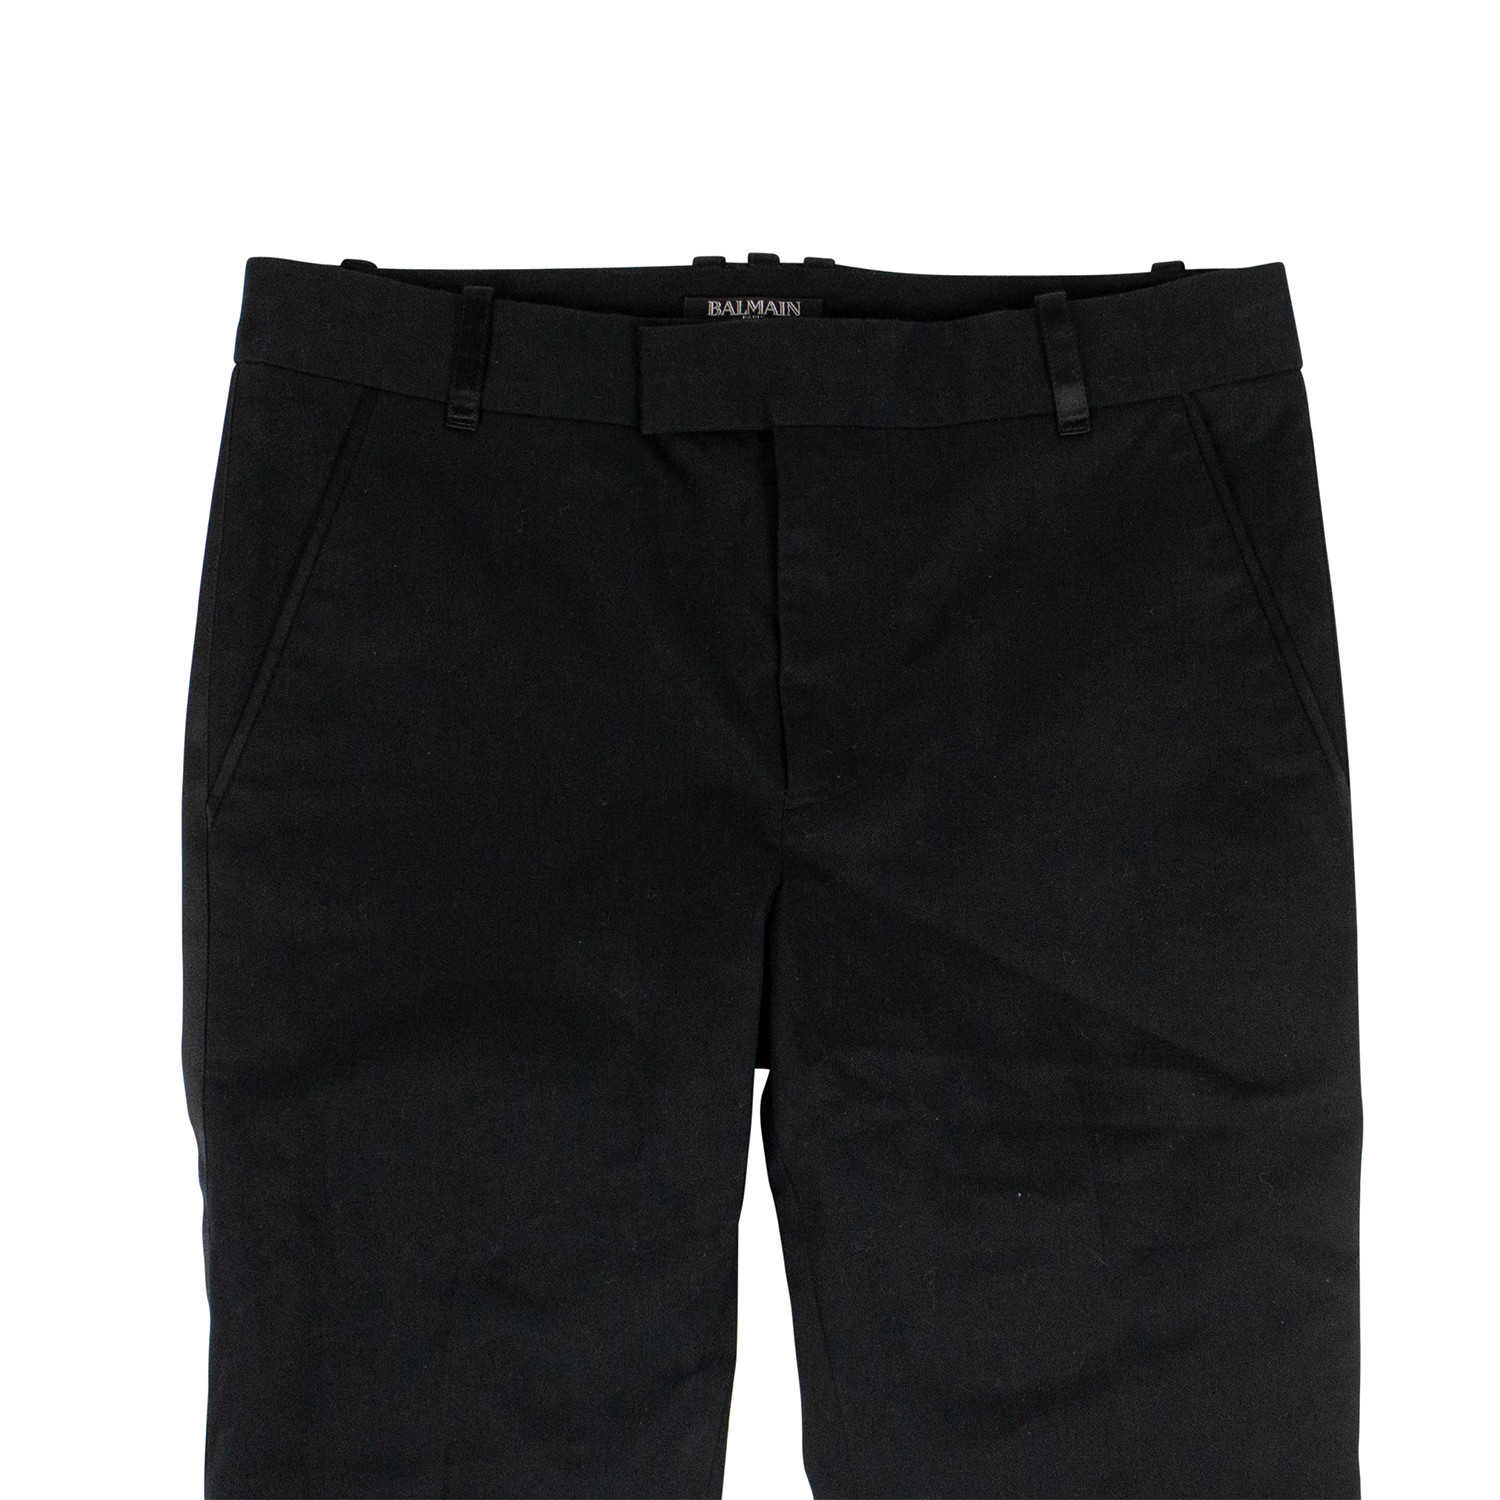 Balmain Paris // Tuxedo Trousers Pants // Black (28) - Designer ...